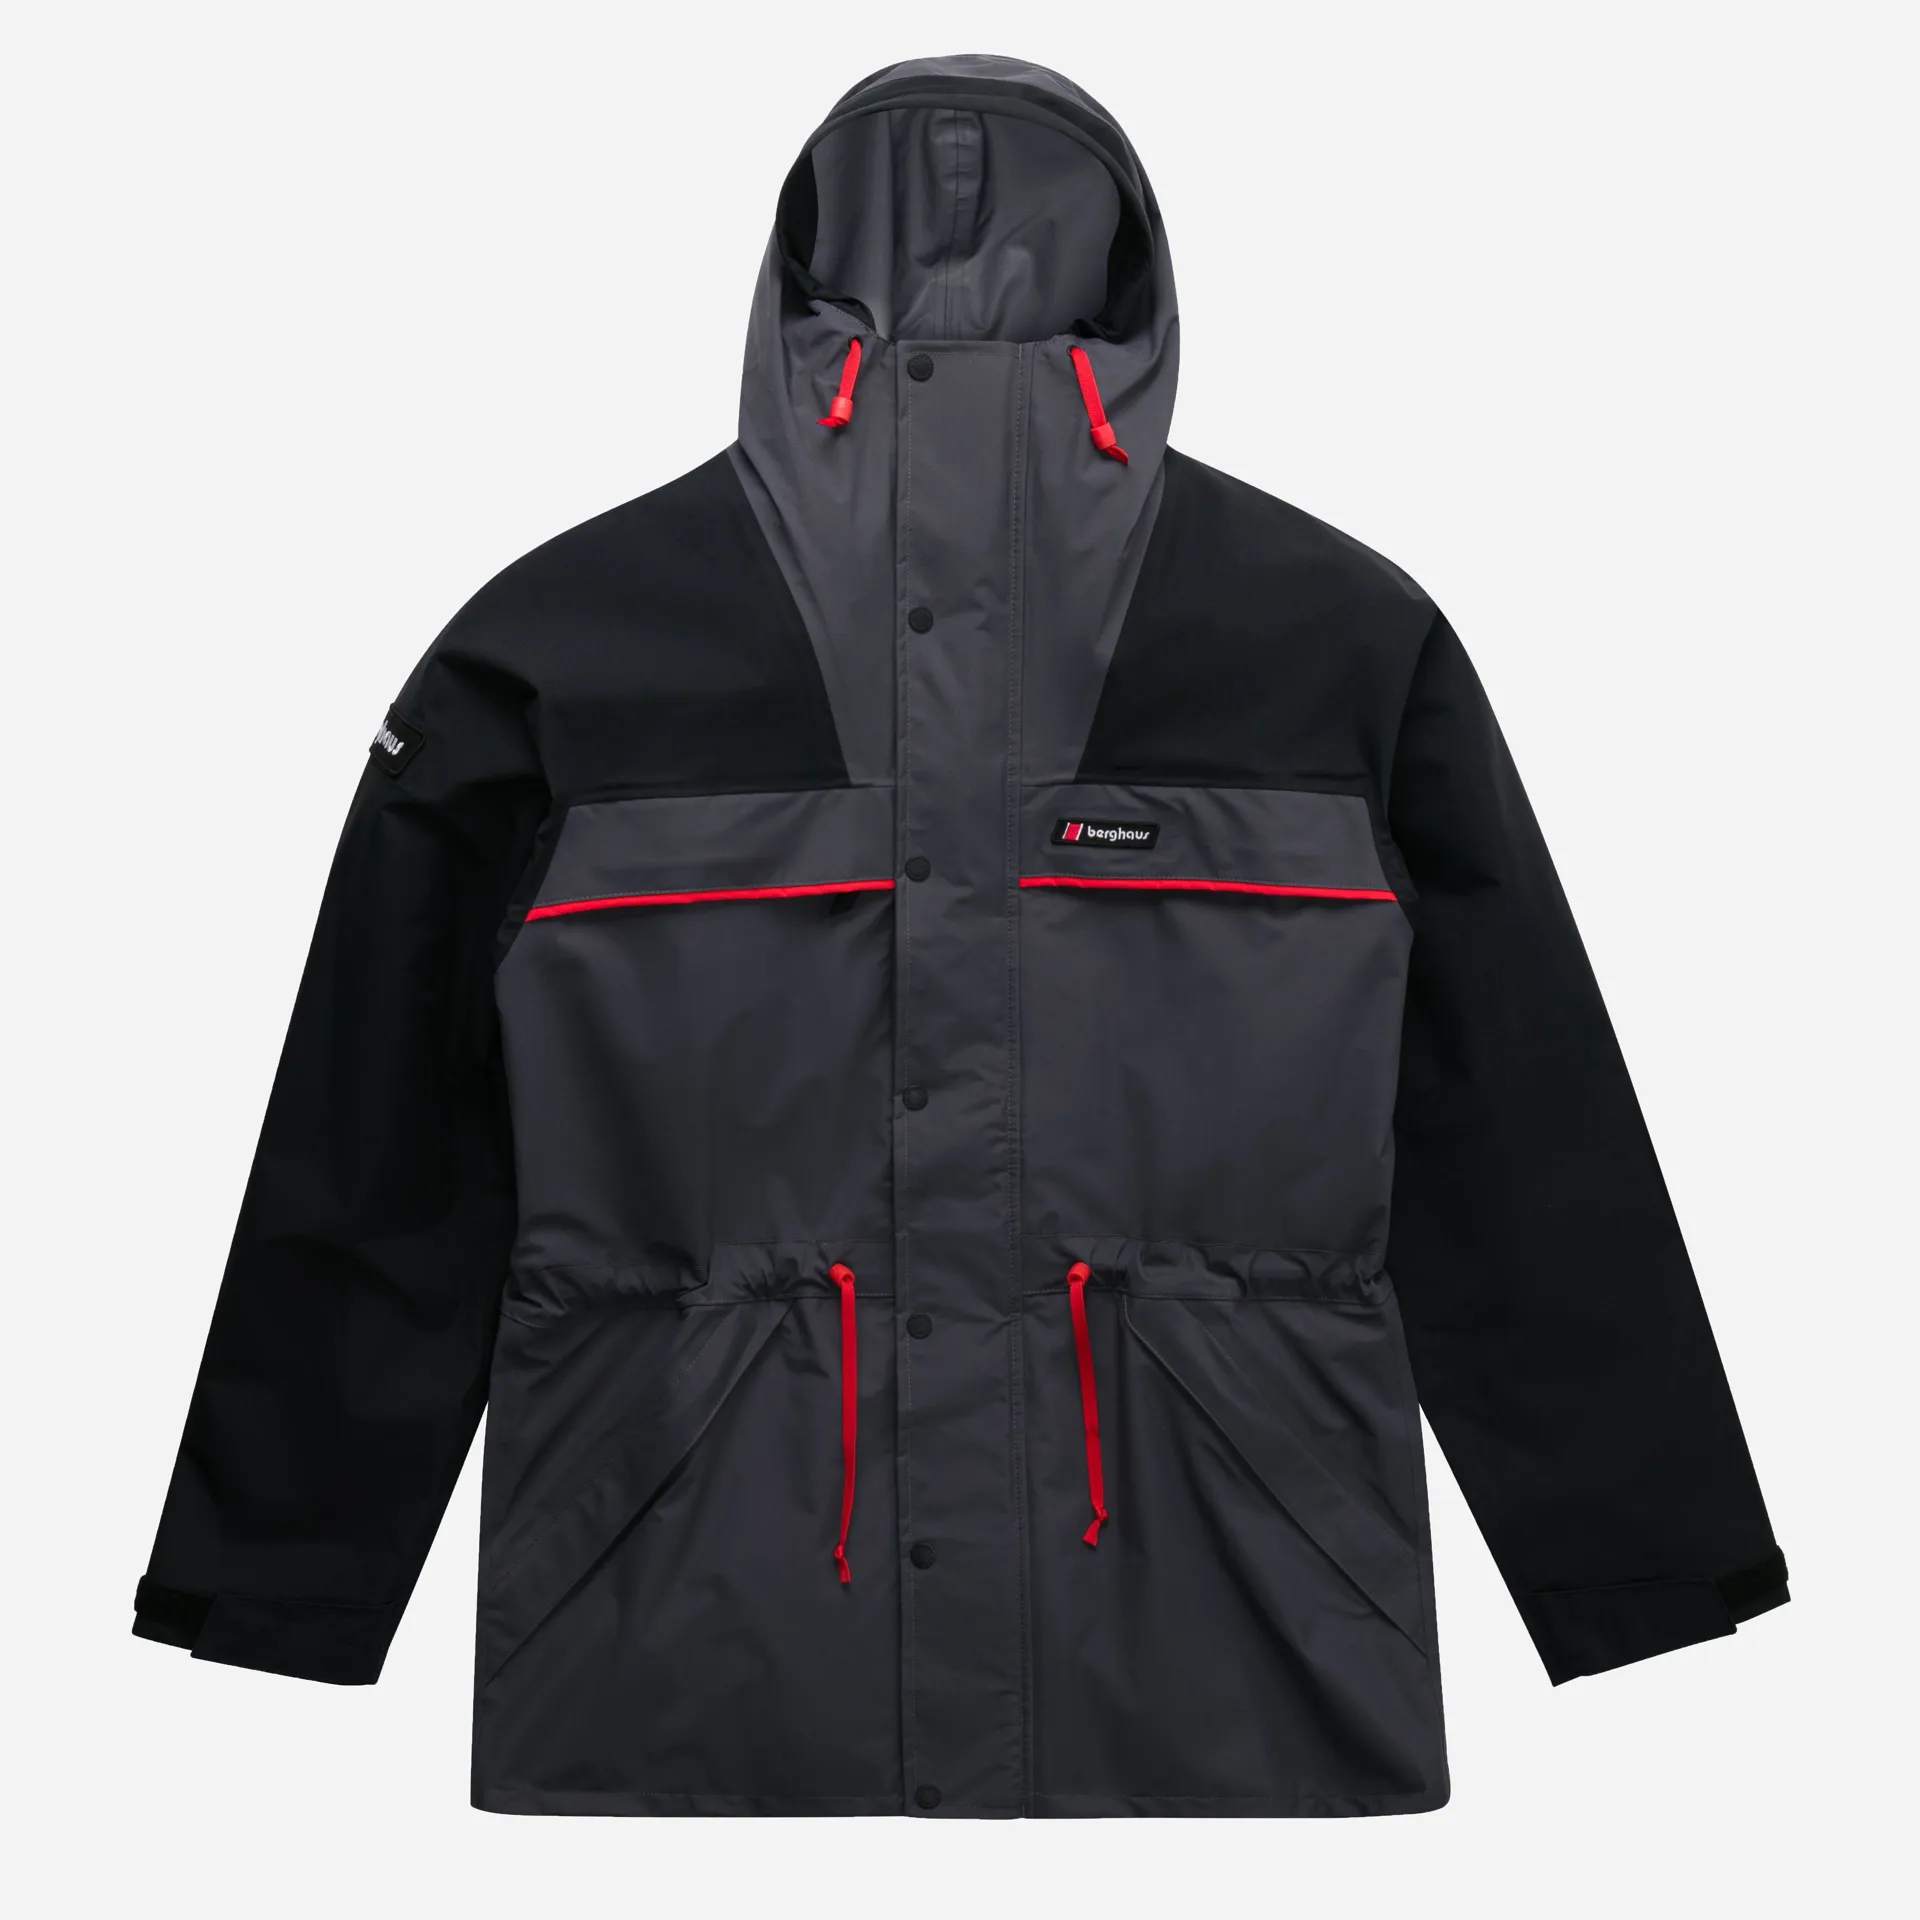 Berghaus Men's Tempest 89 Waterproof Shell Jacket in Grey/Black